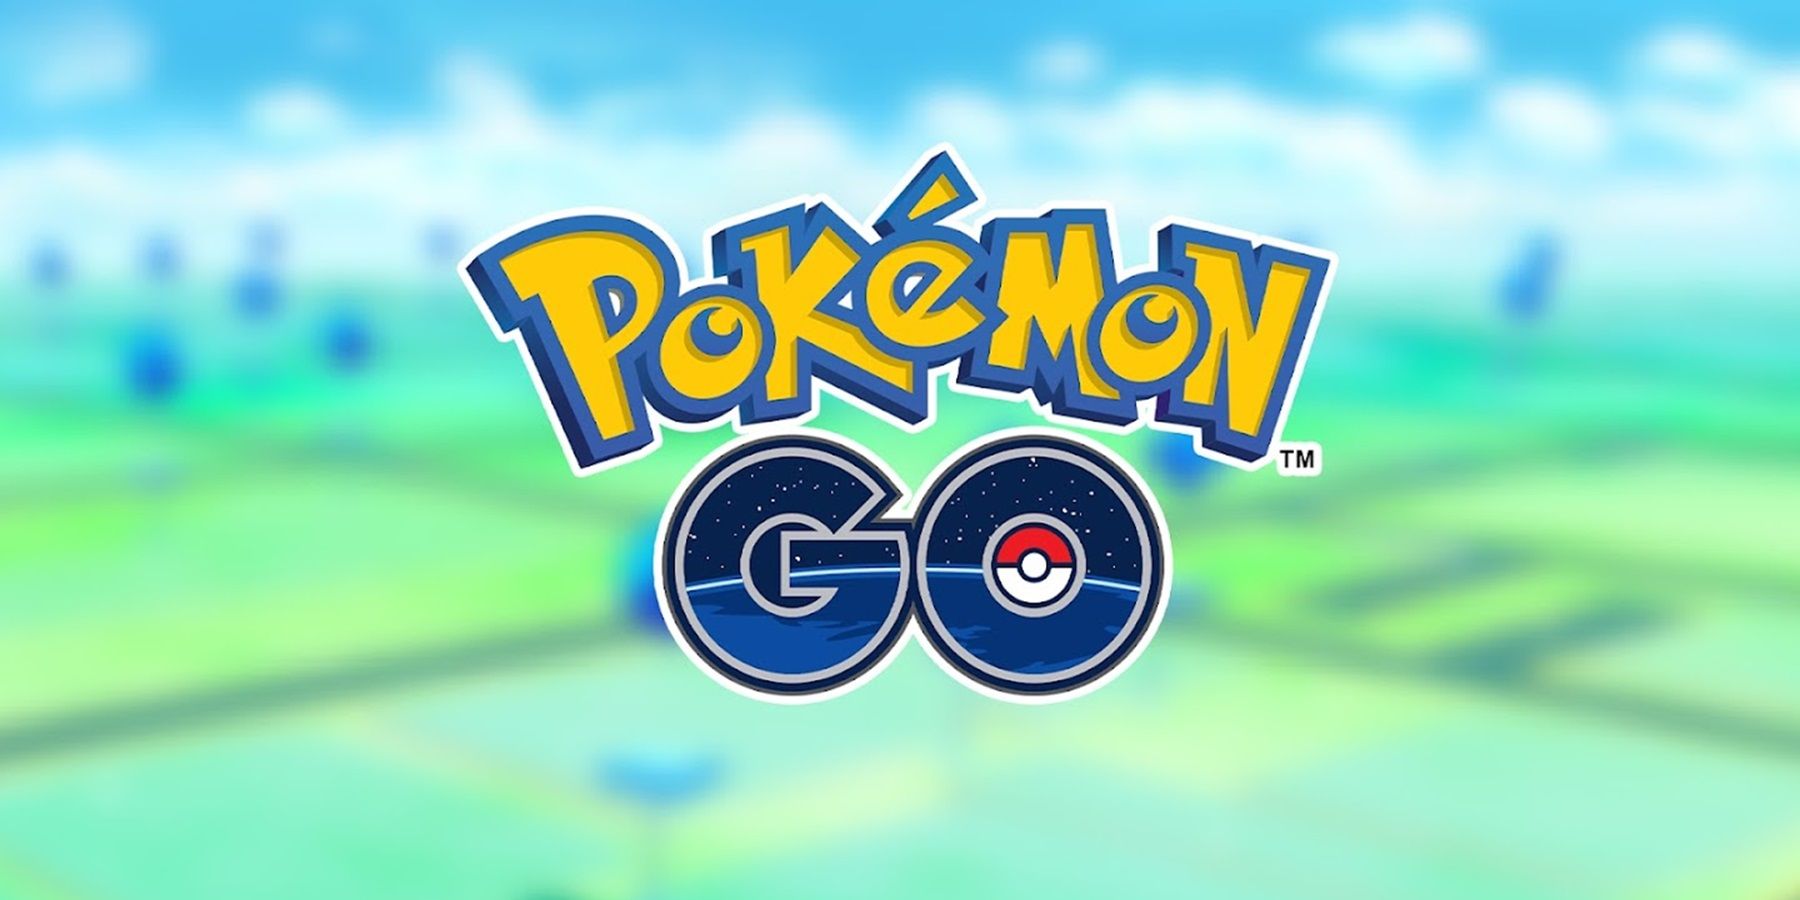 pokemon go logo with pokestops in background